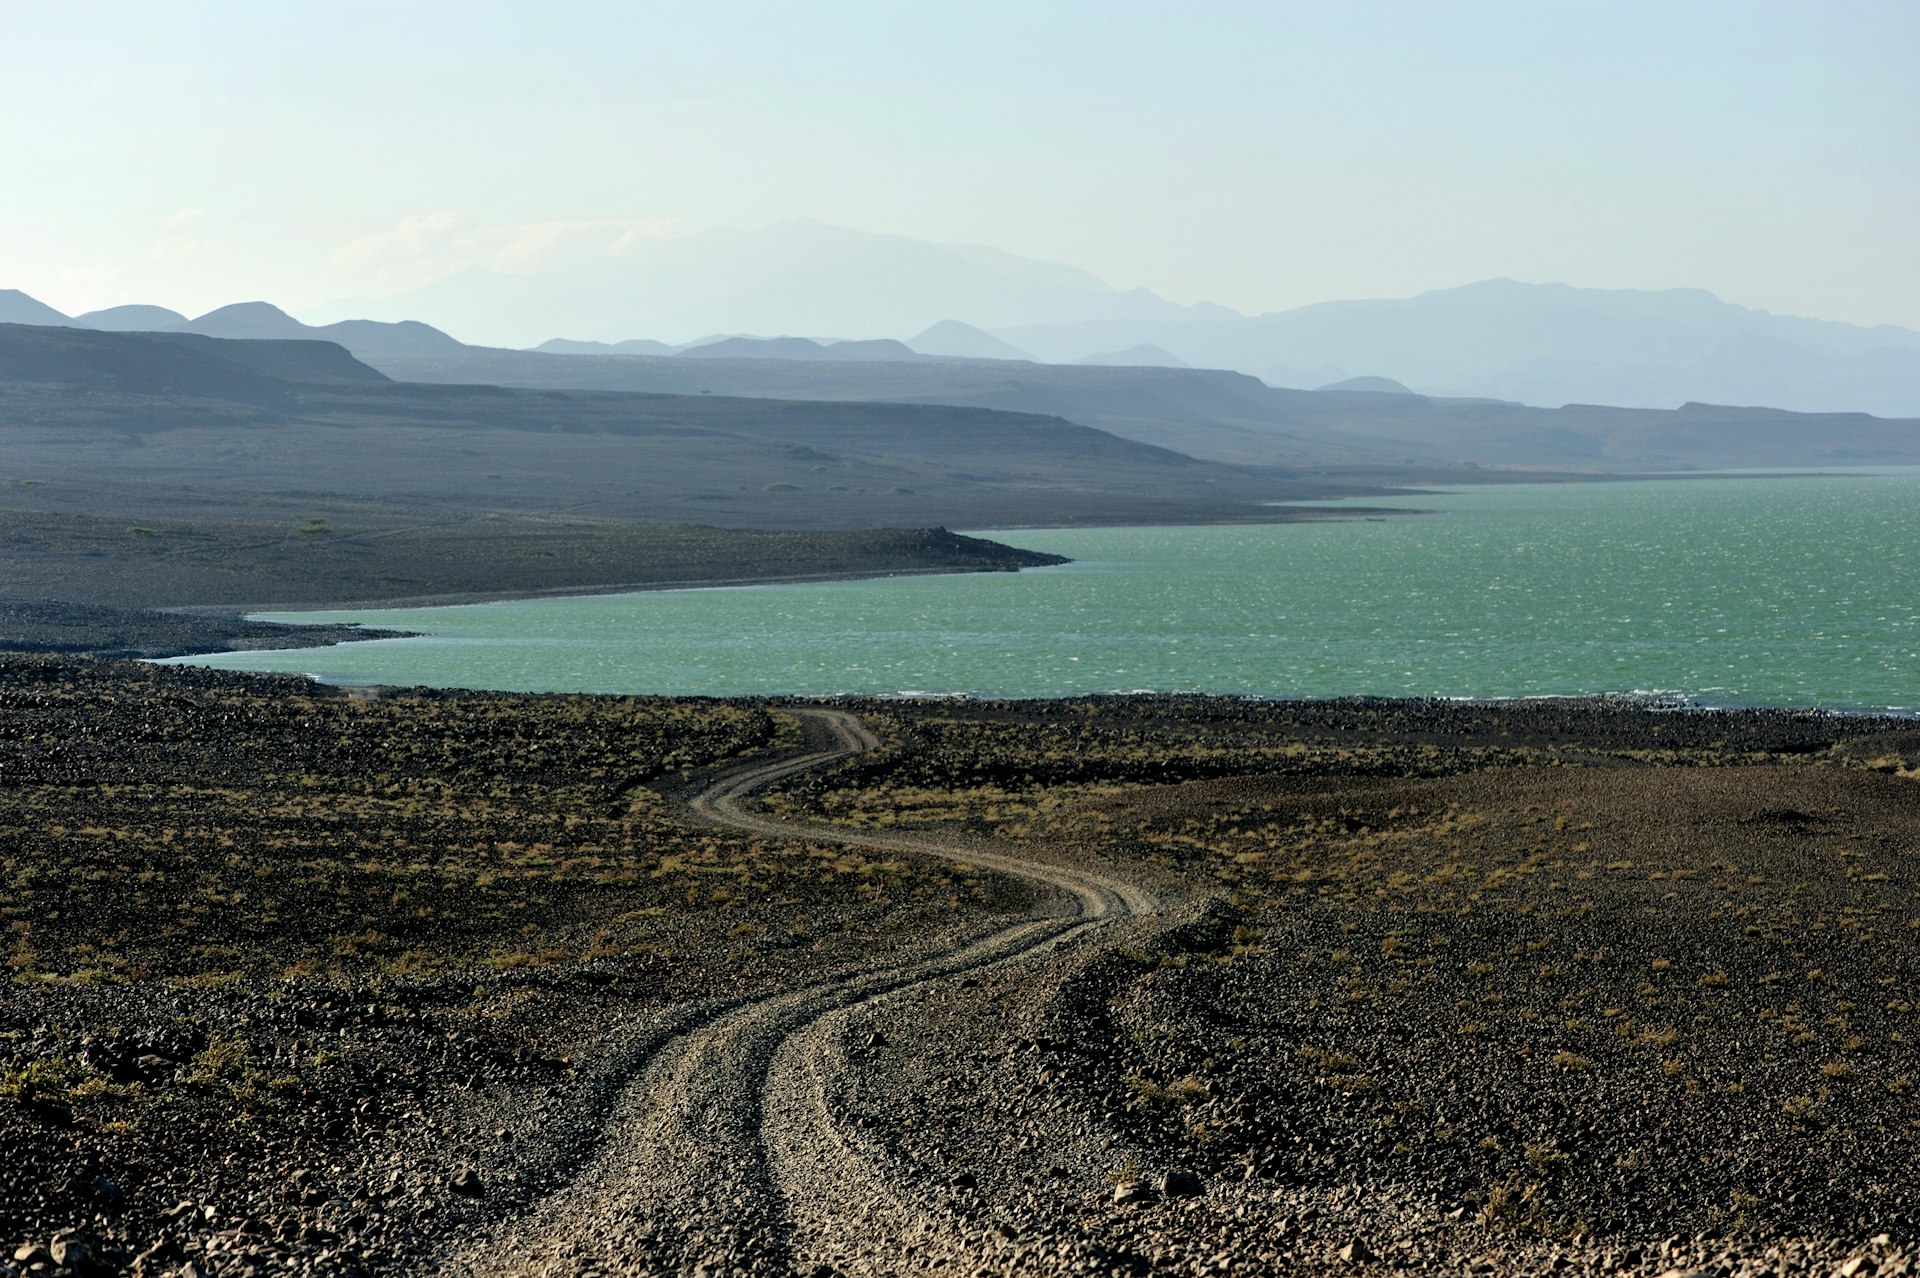 Road along the rocky shore of Lake Turkana, North Kenya